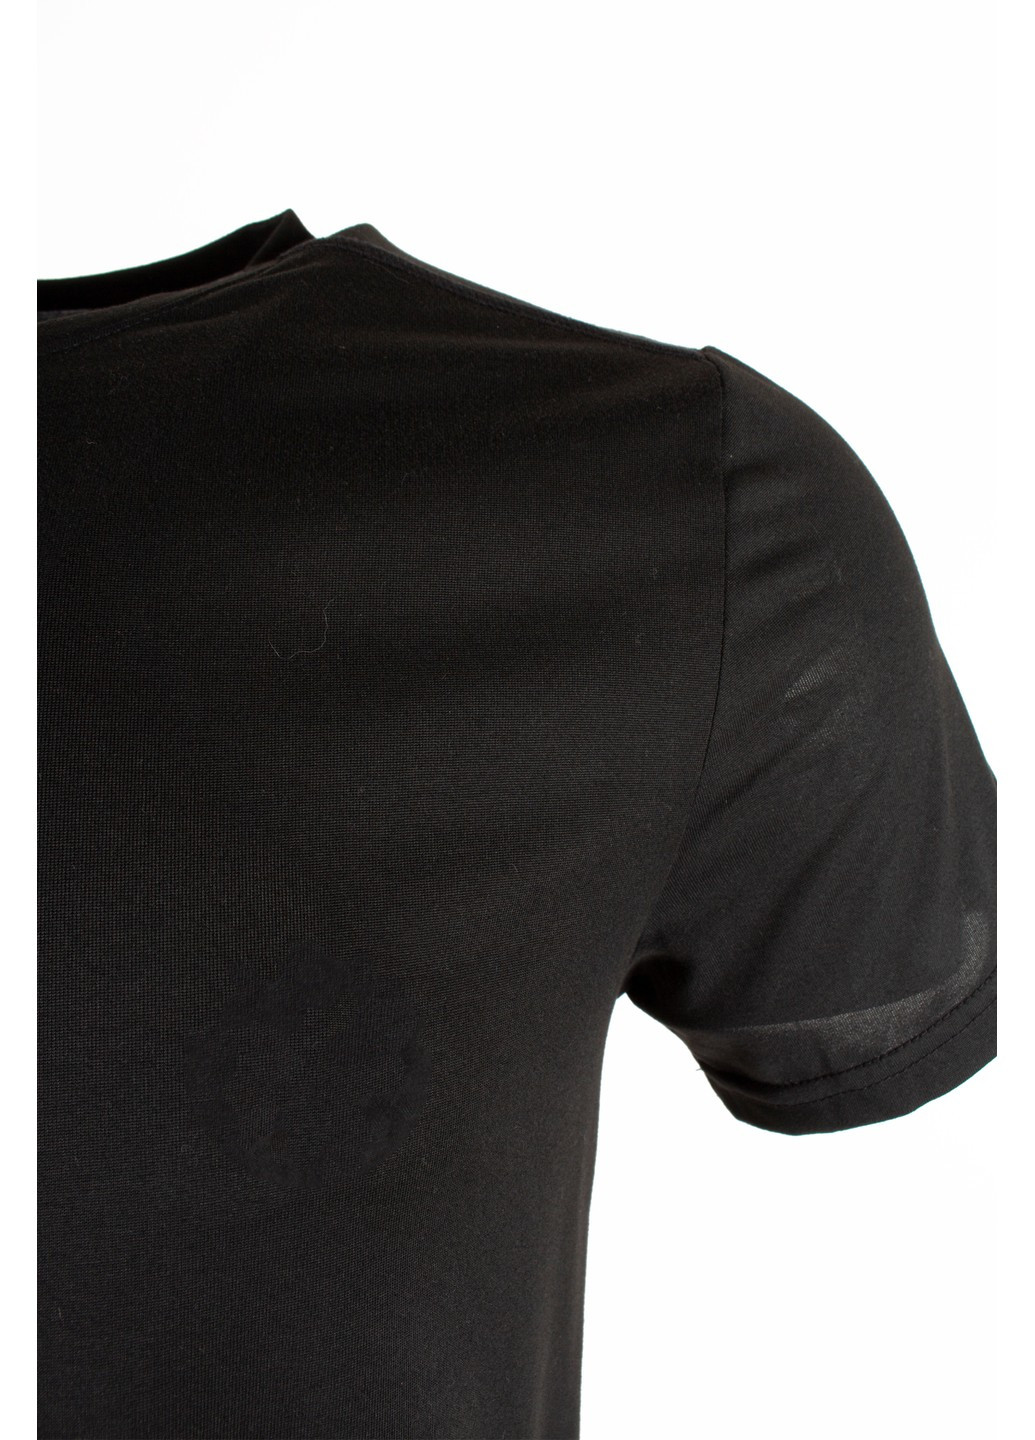 Черная футболка мужская черная 070821-001200 Crivit